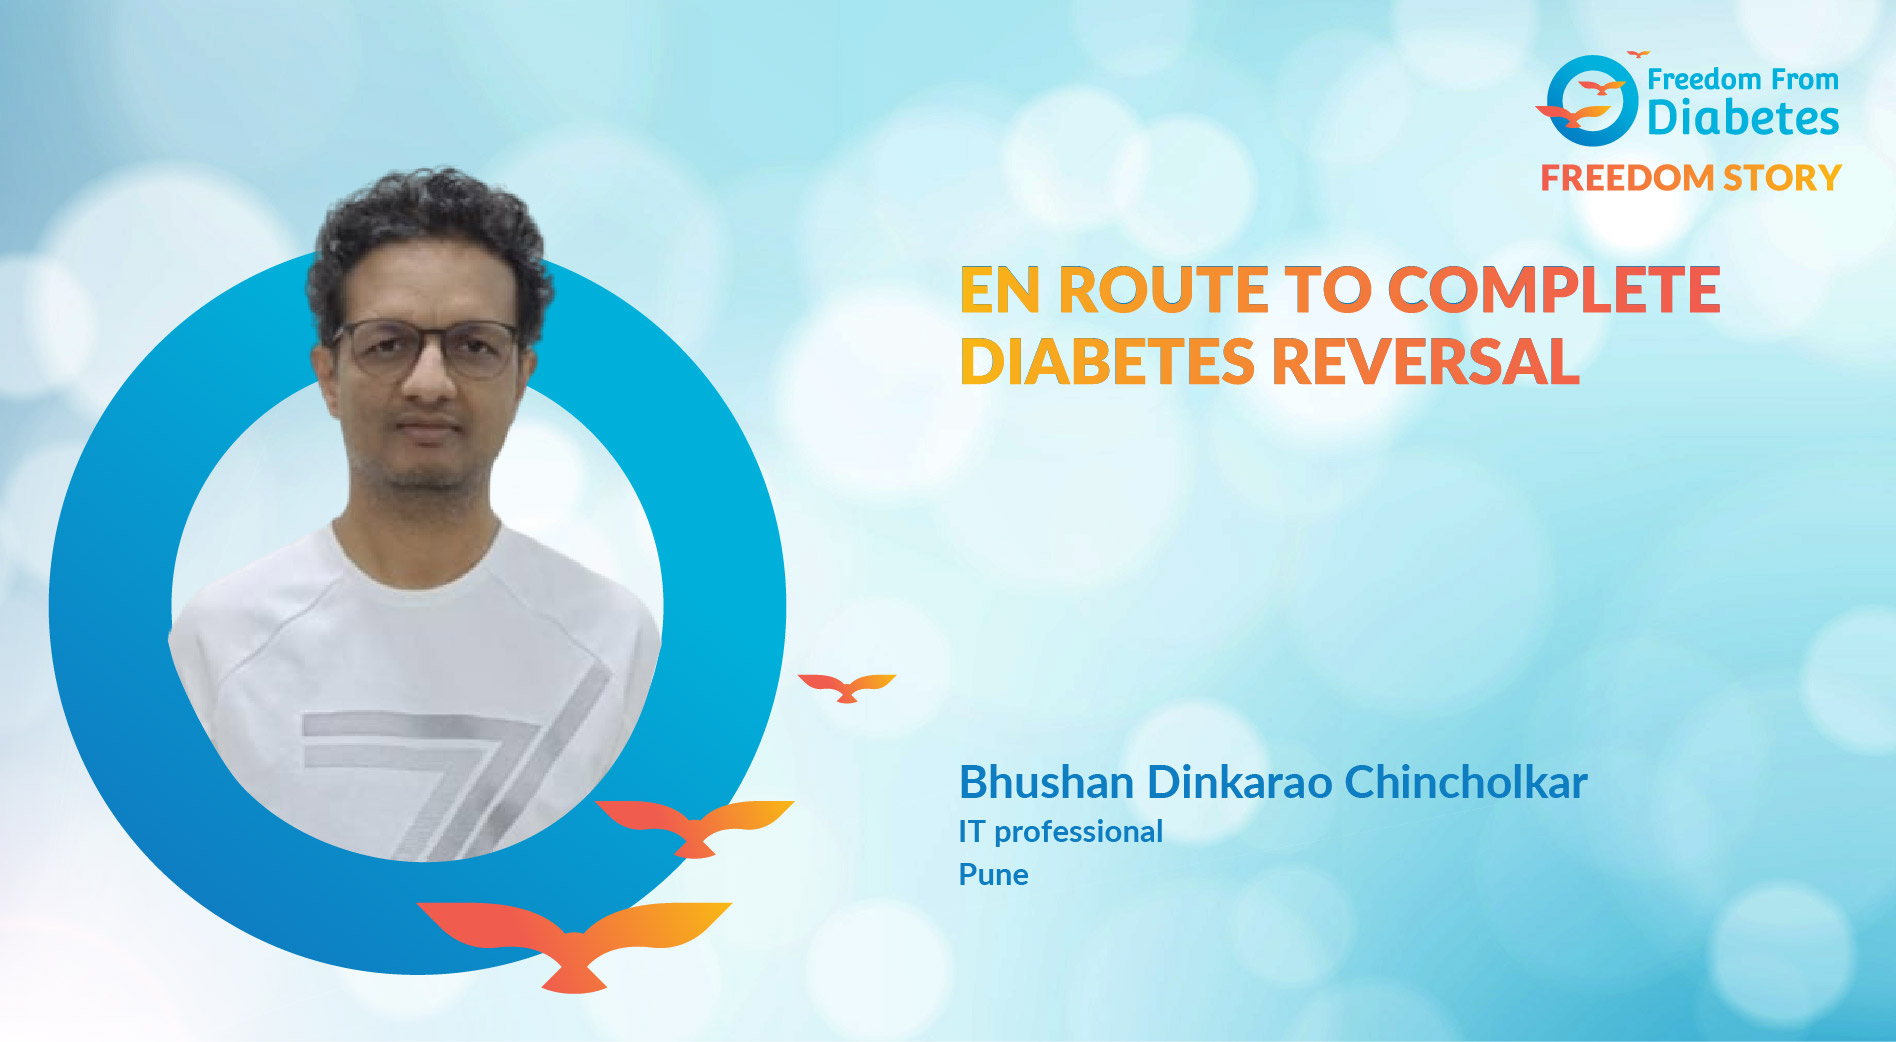 Bhushan Dinkkarao Chincholkar: Grateful to FFD...saved from starting medicines